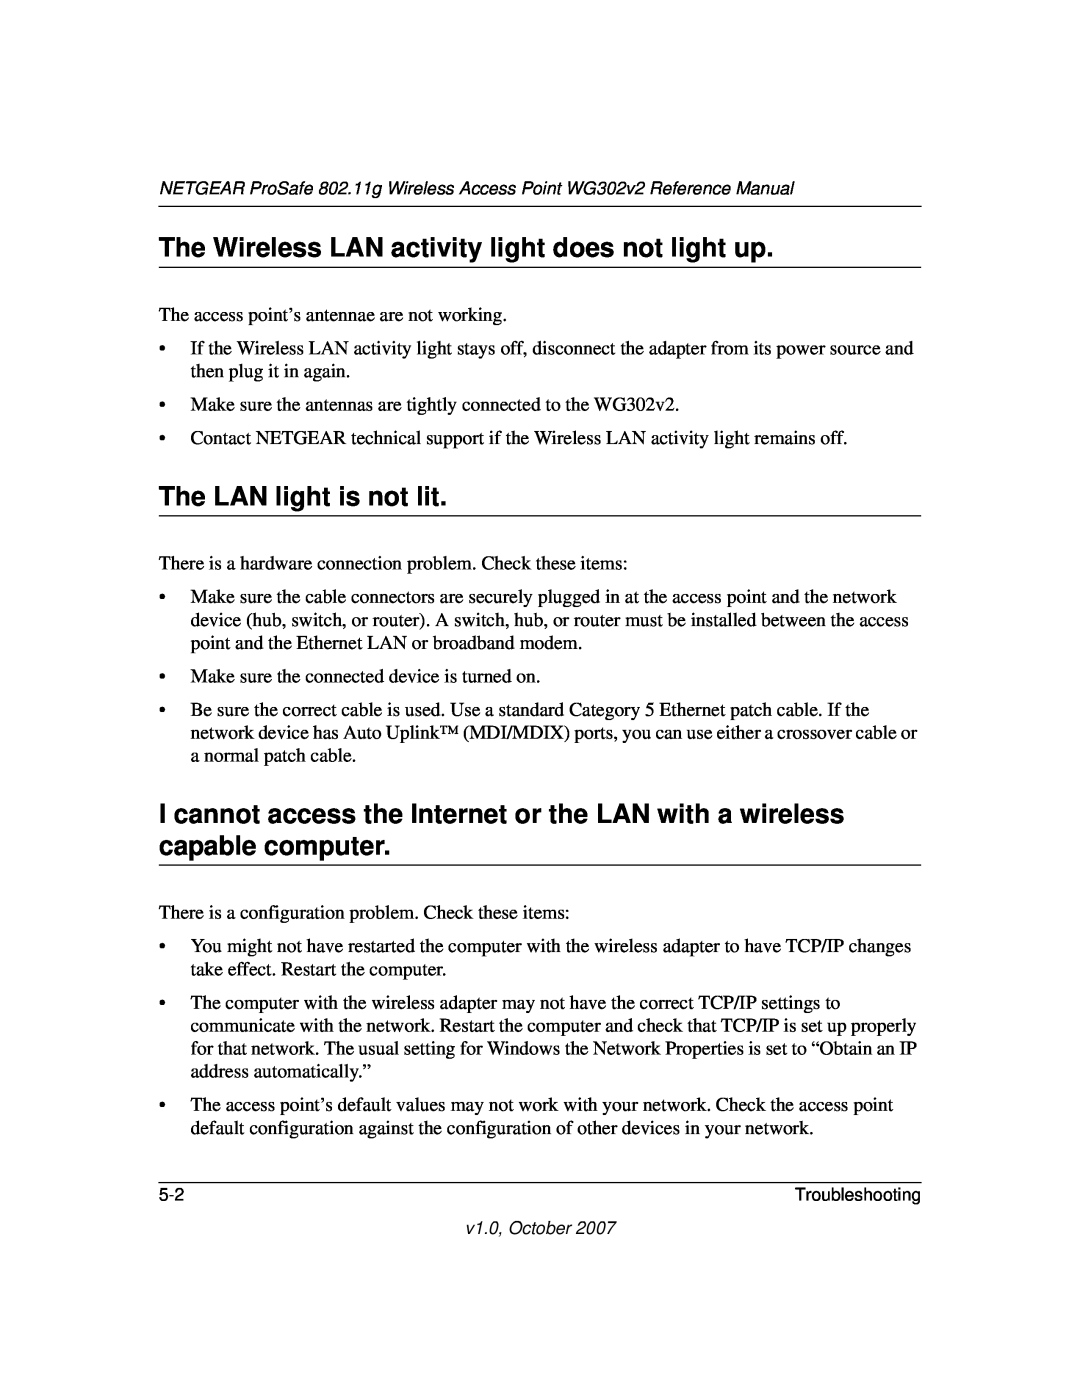 WGC WG302V2 manual The Wireless LAN activity light does not light up, The LAN light is not lit 